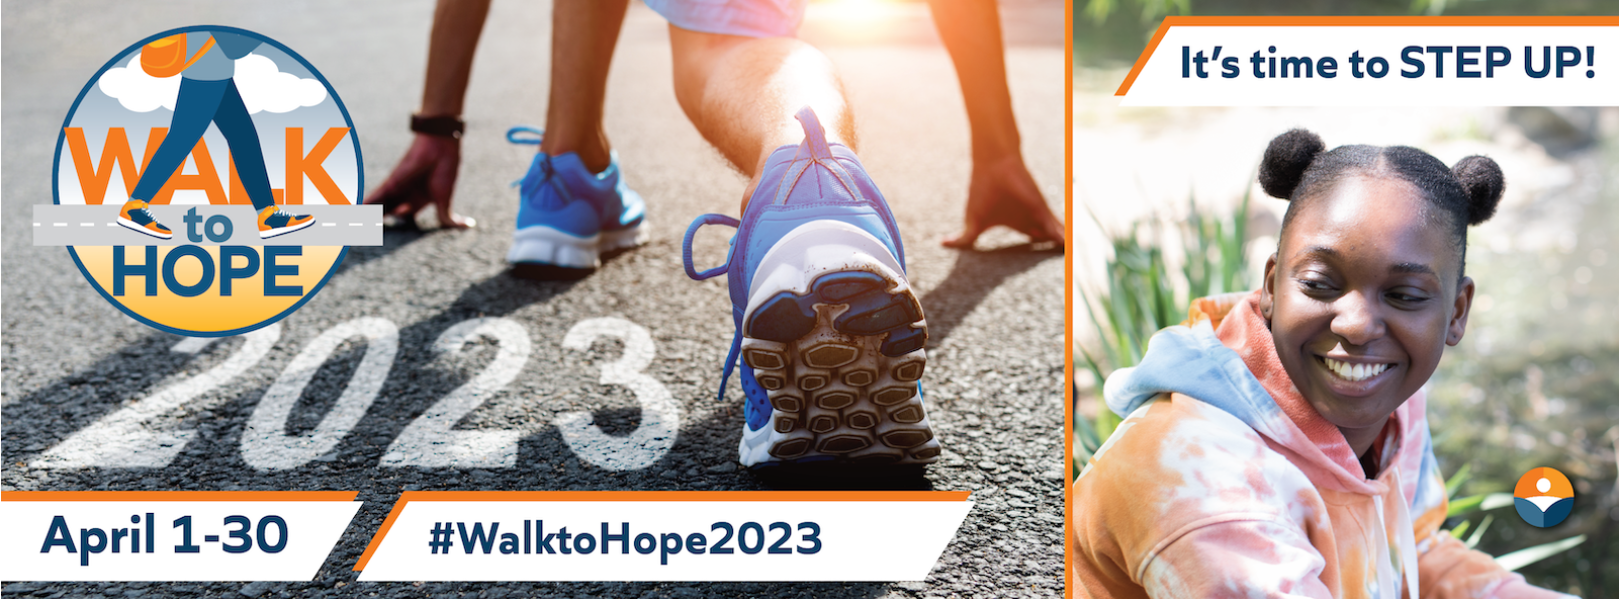 Walk to Hope 2023